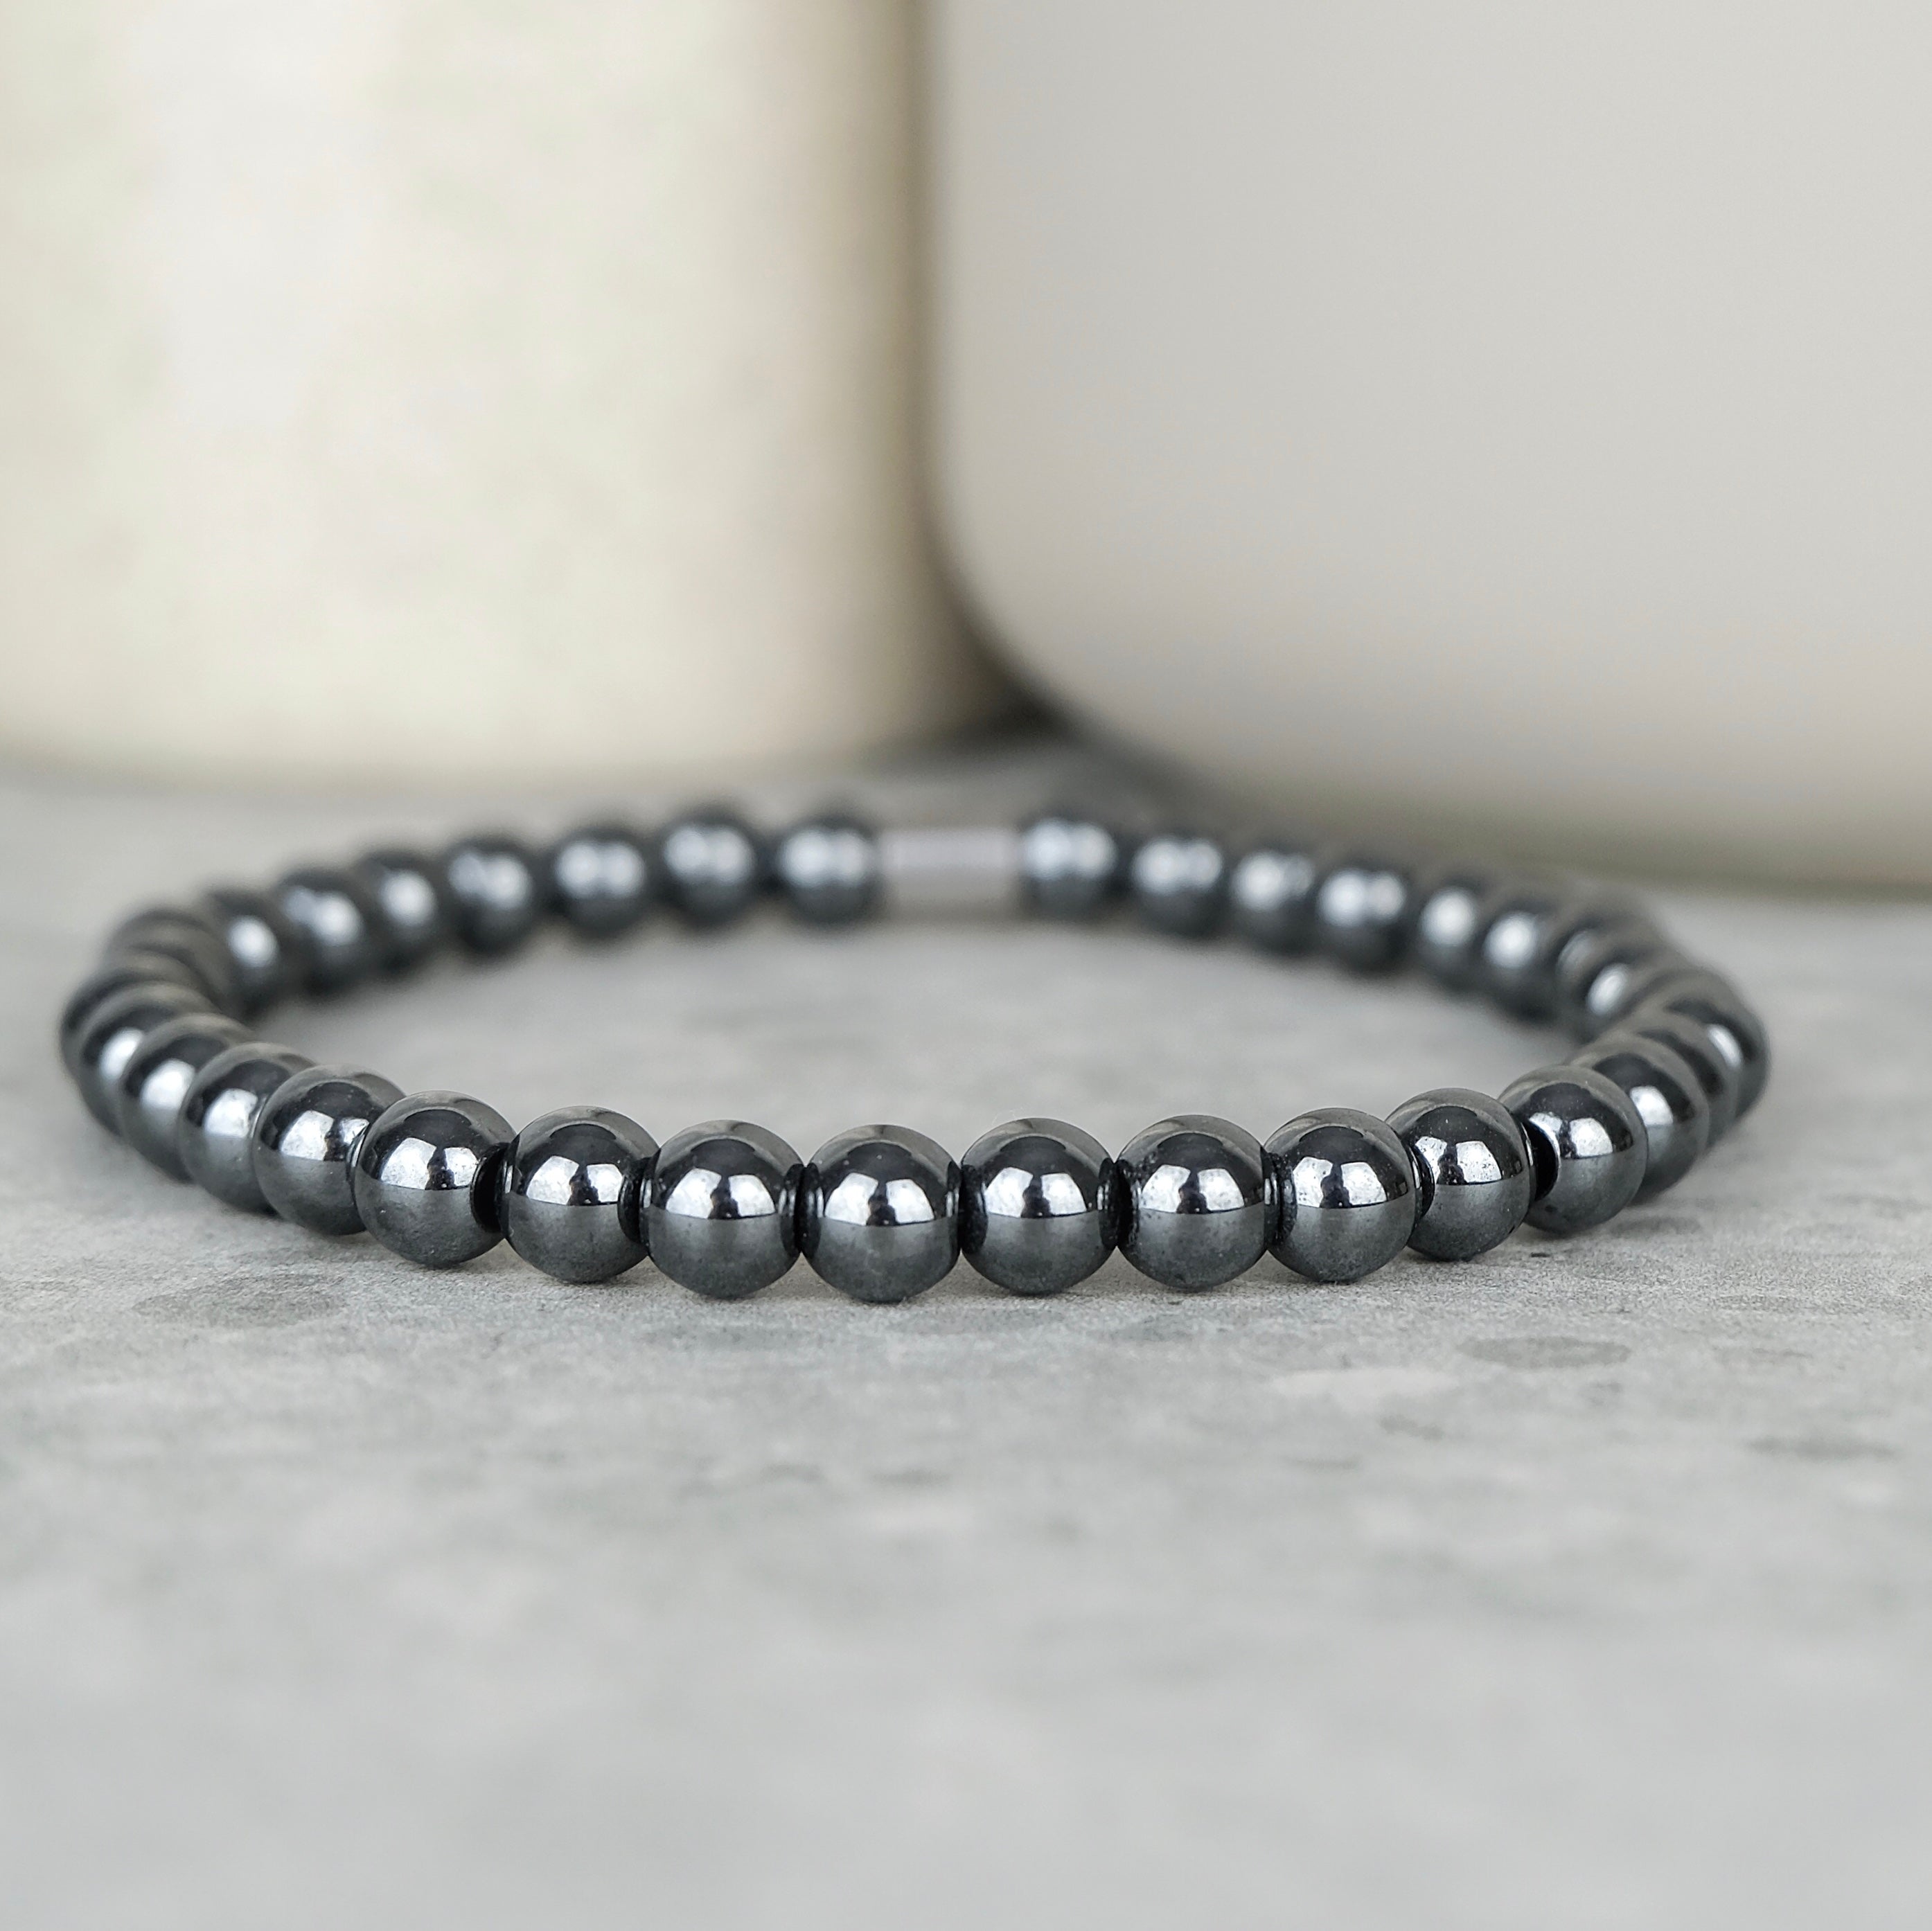 Hematite gemstone bracelet in 6mm beads with steel accessory